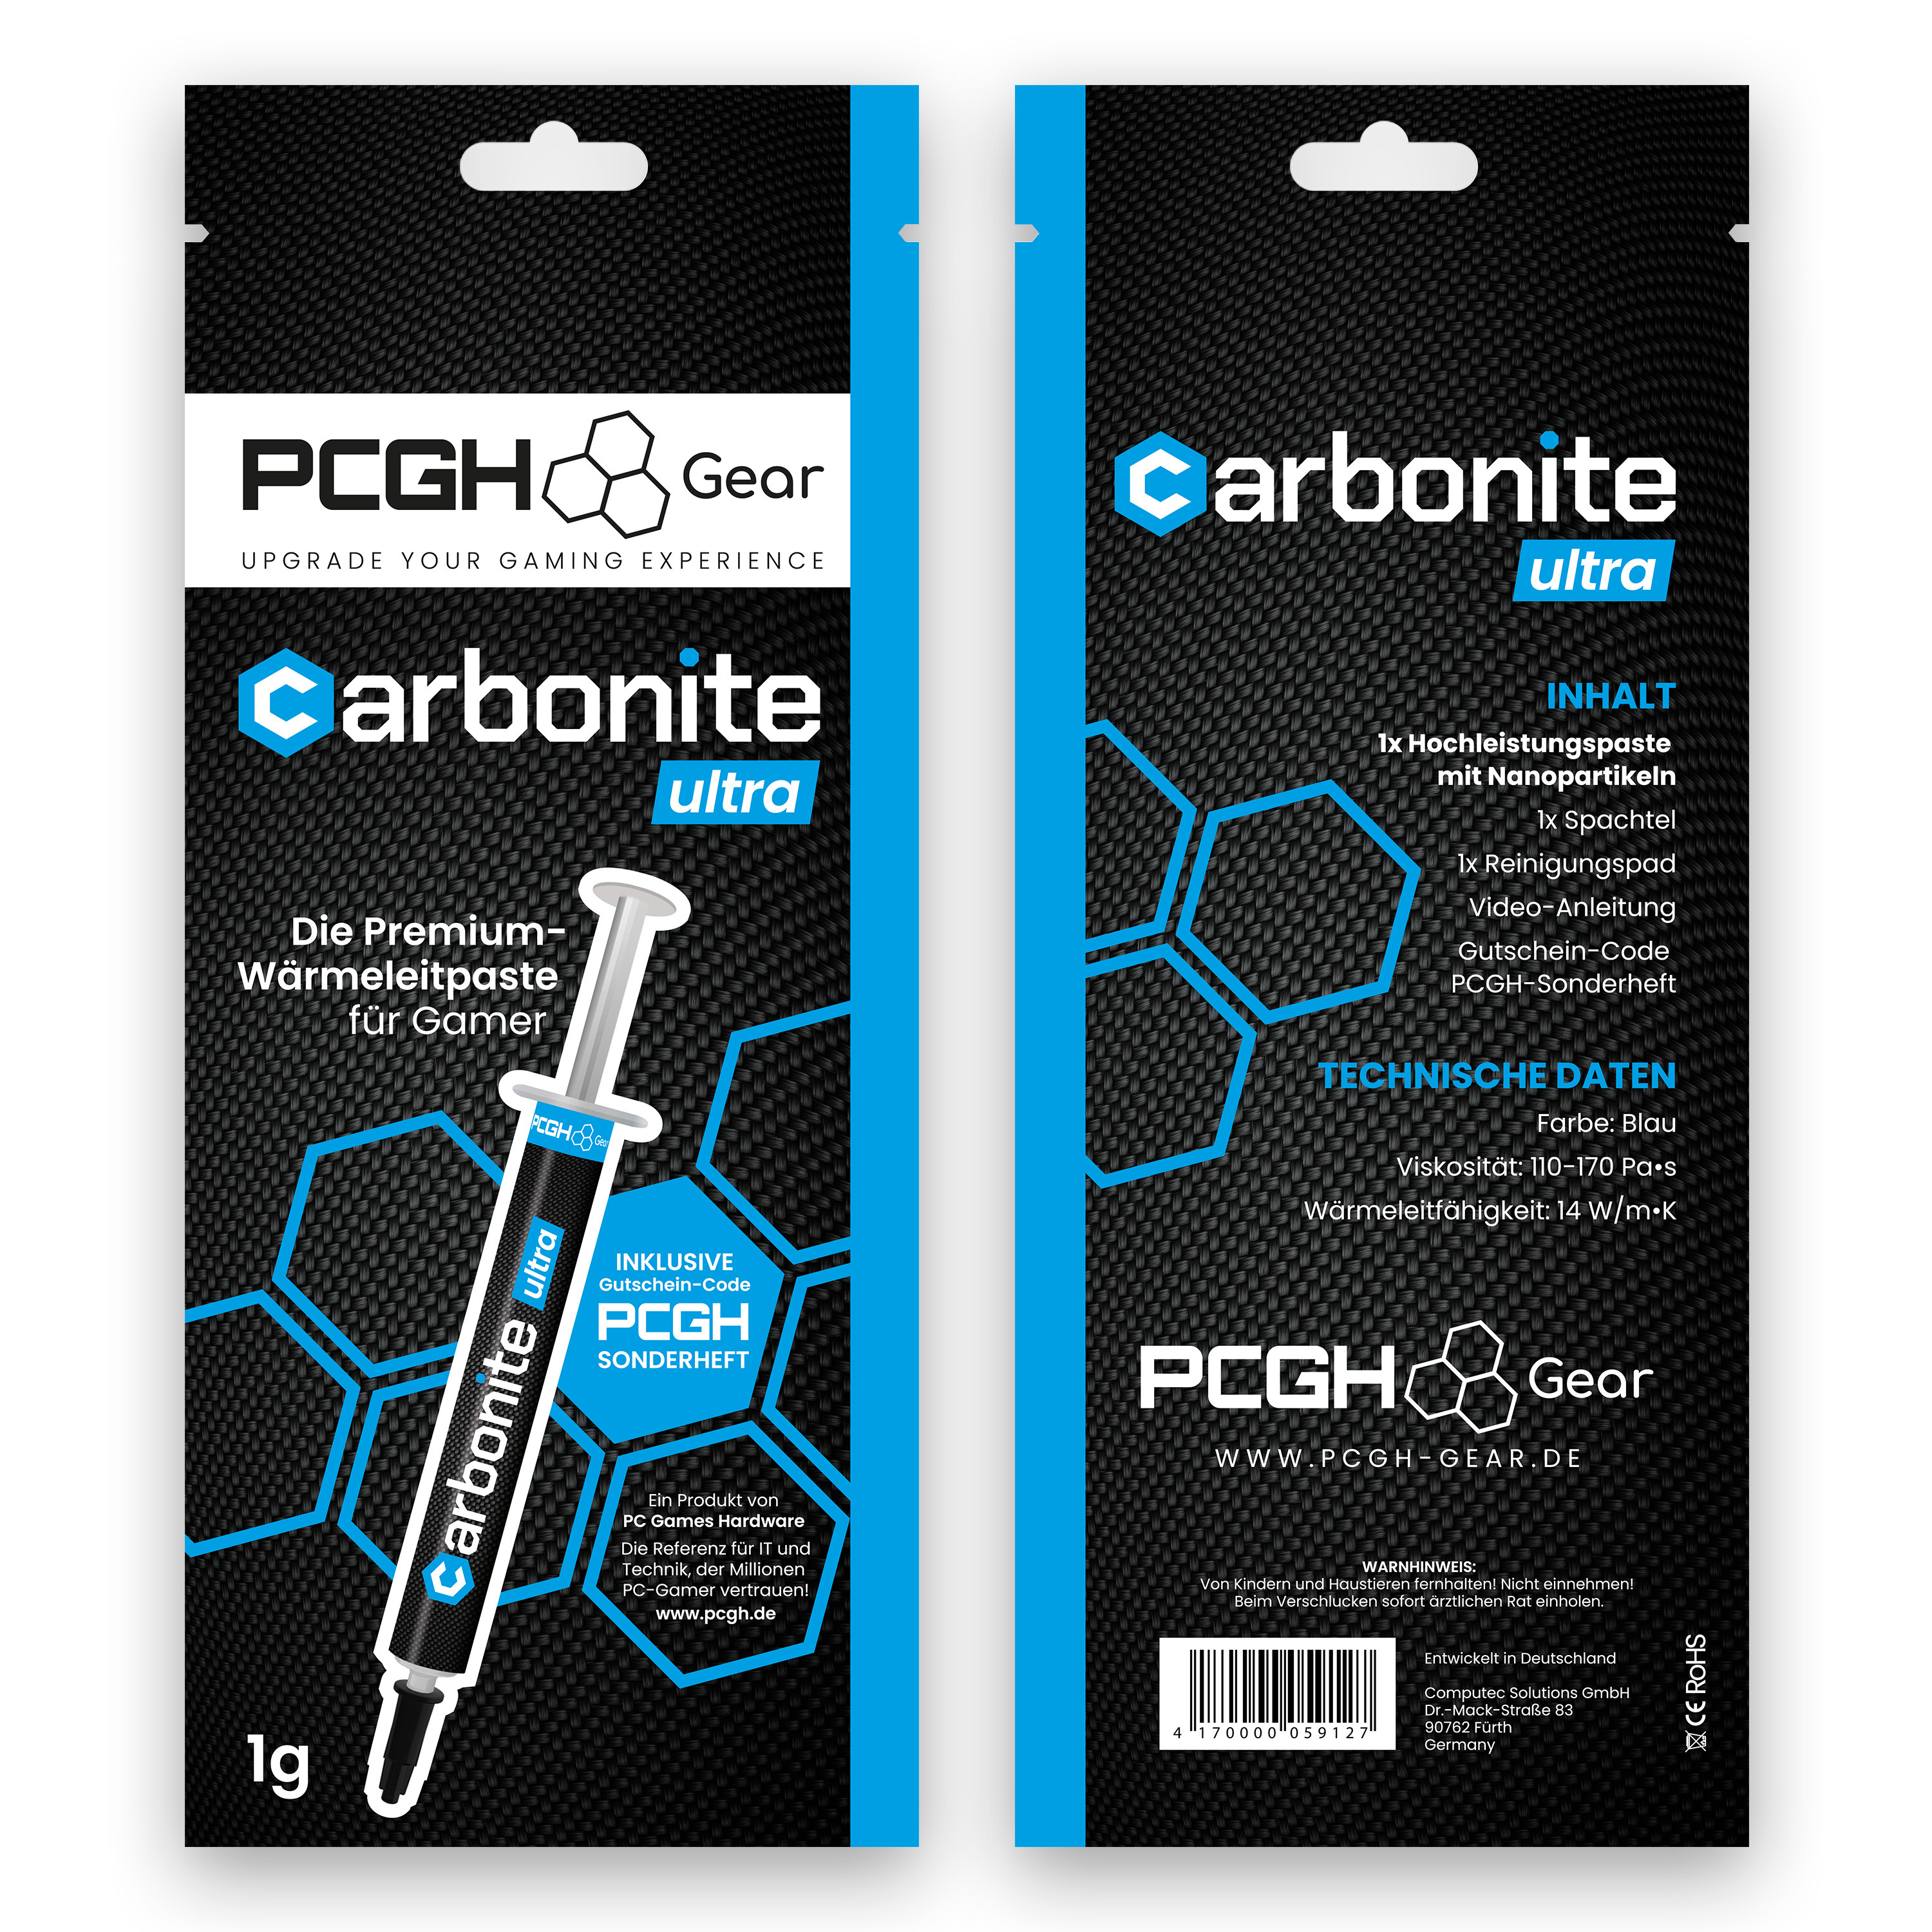 PCGH-Gear Carbonite Ultra (1g)